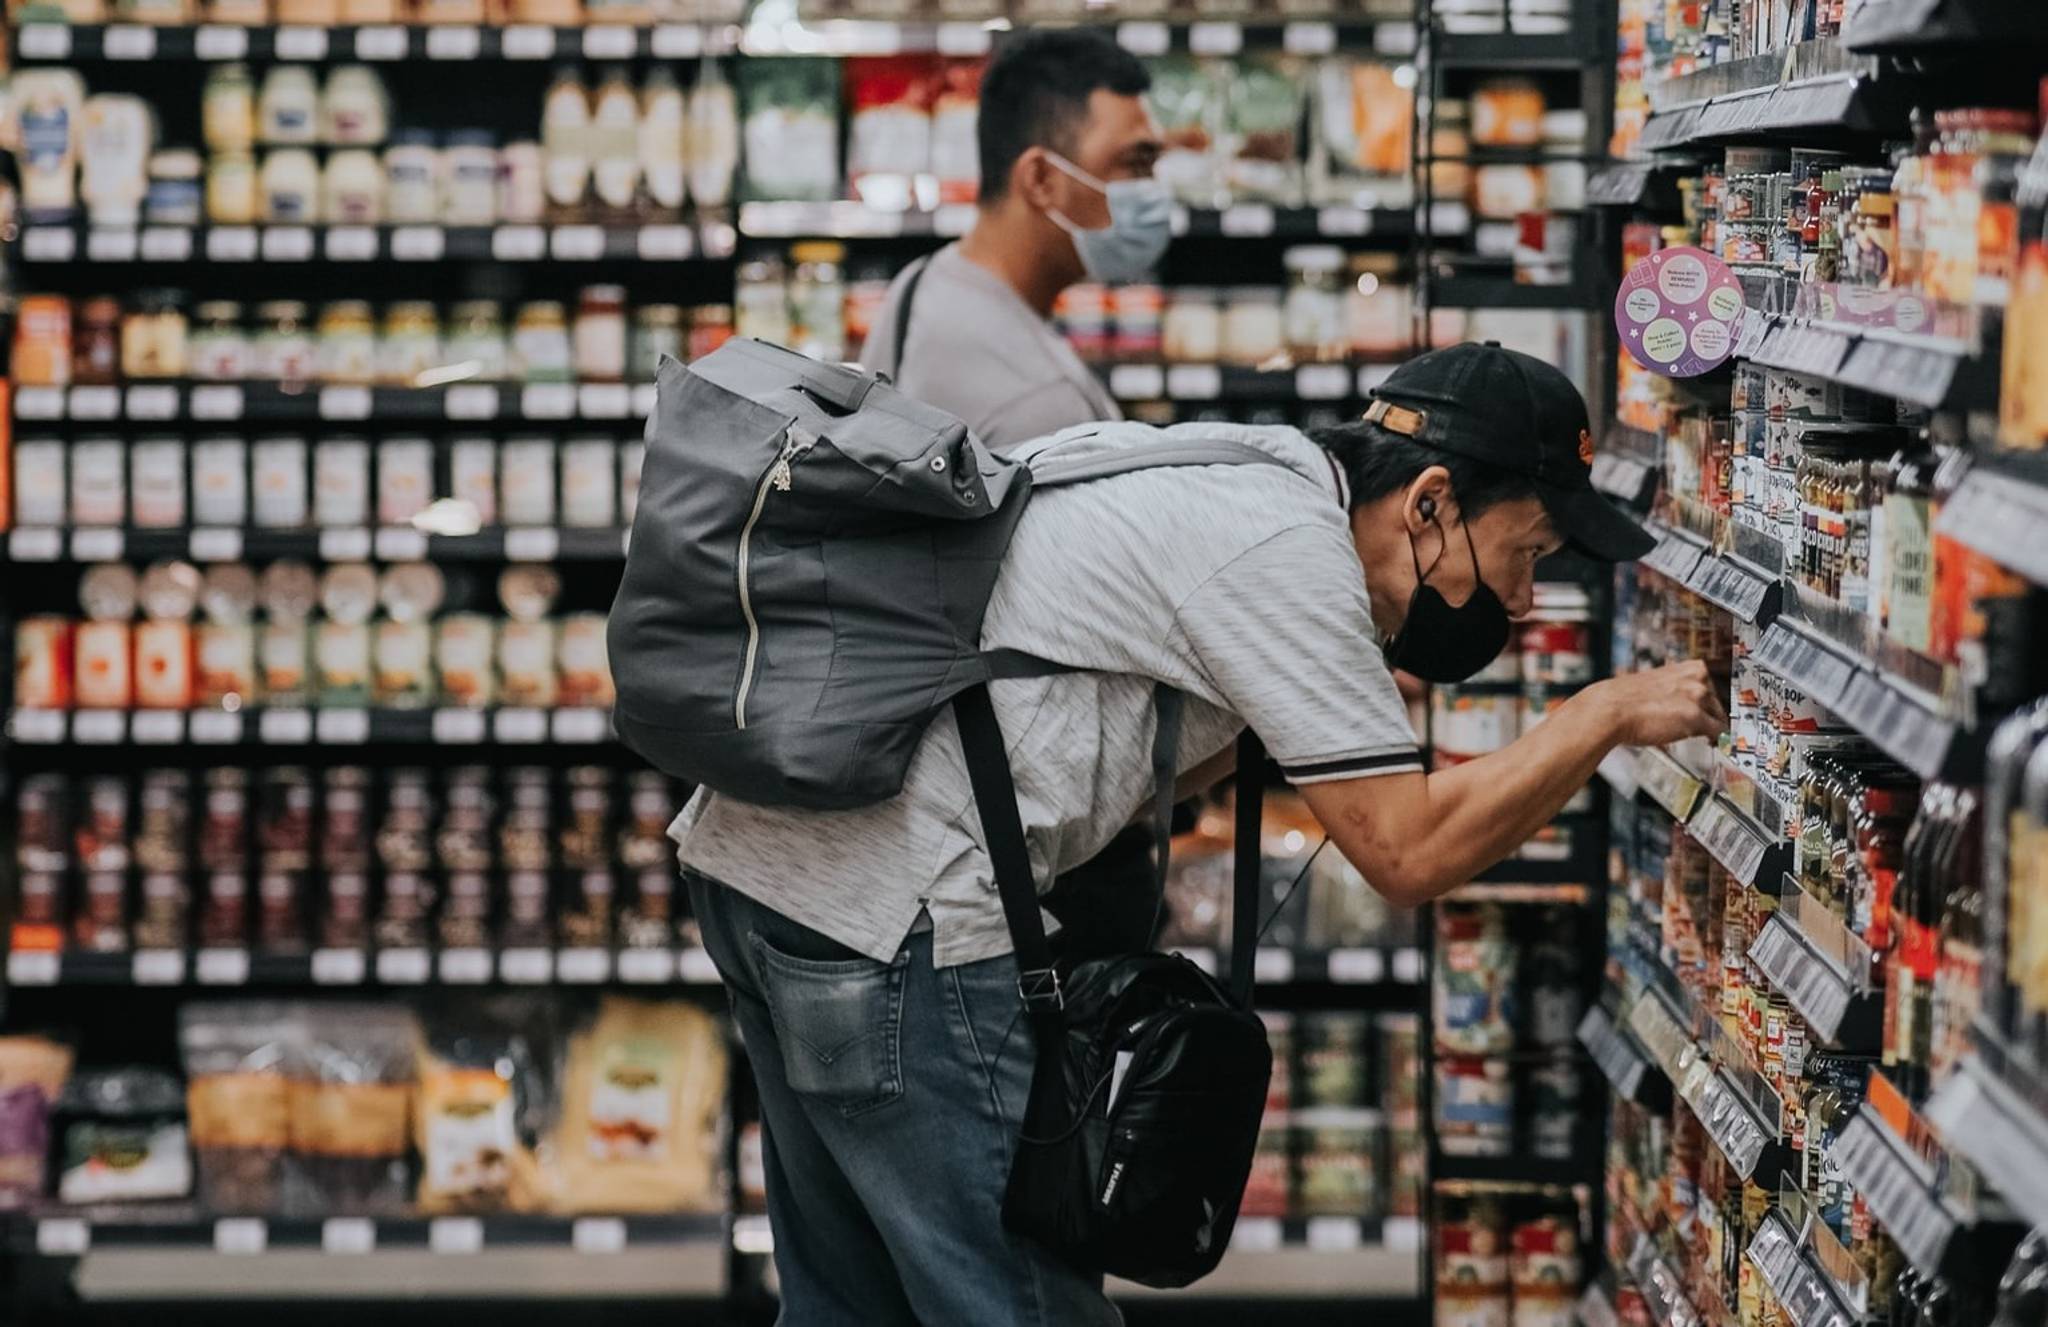 Nomitri transforms phones into supermarket checkouts